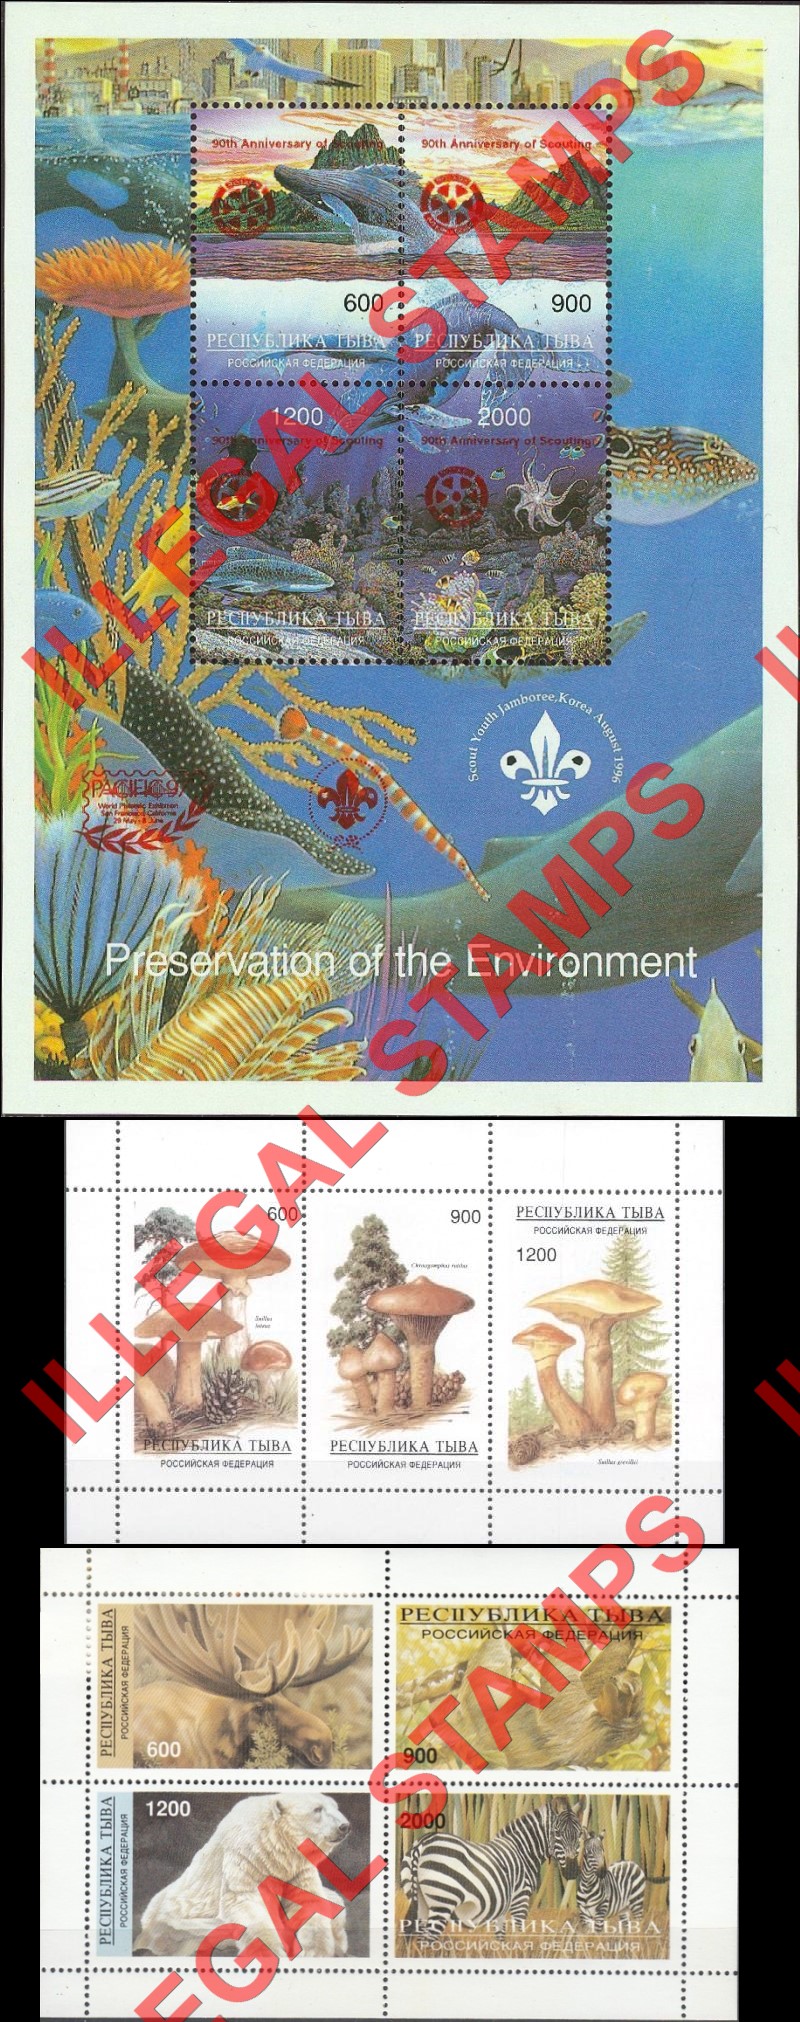 Republic of Tuva 1997 Counterfeit Illegal Stamps (Part 2)